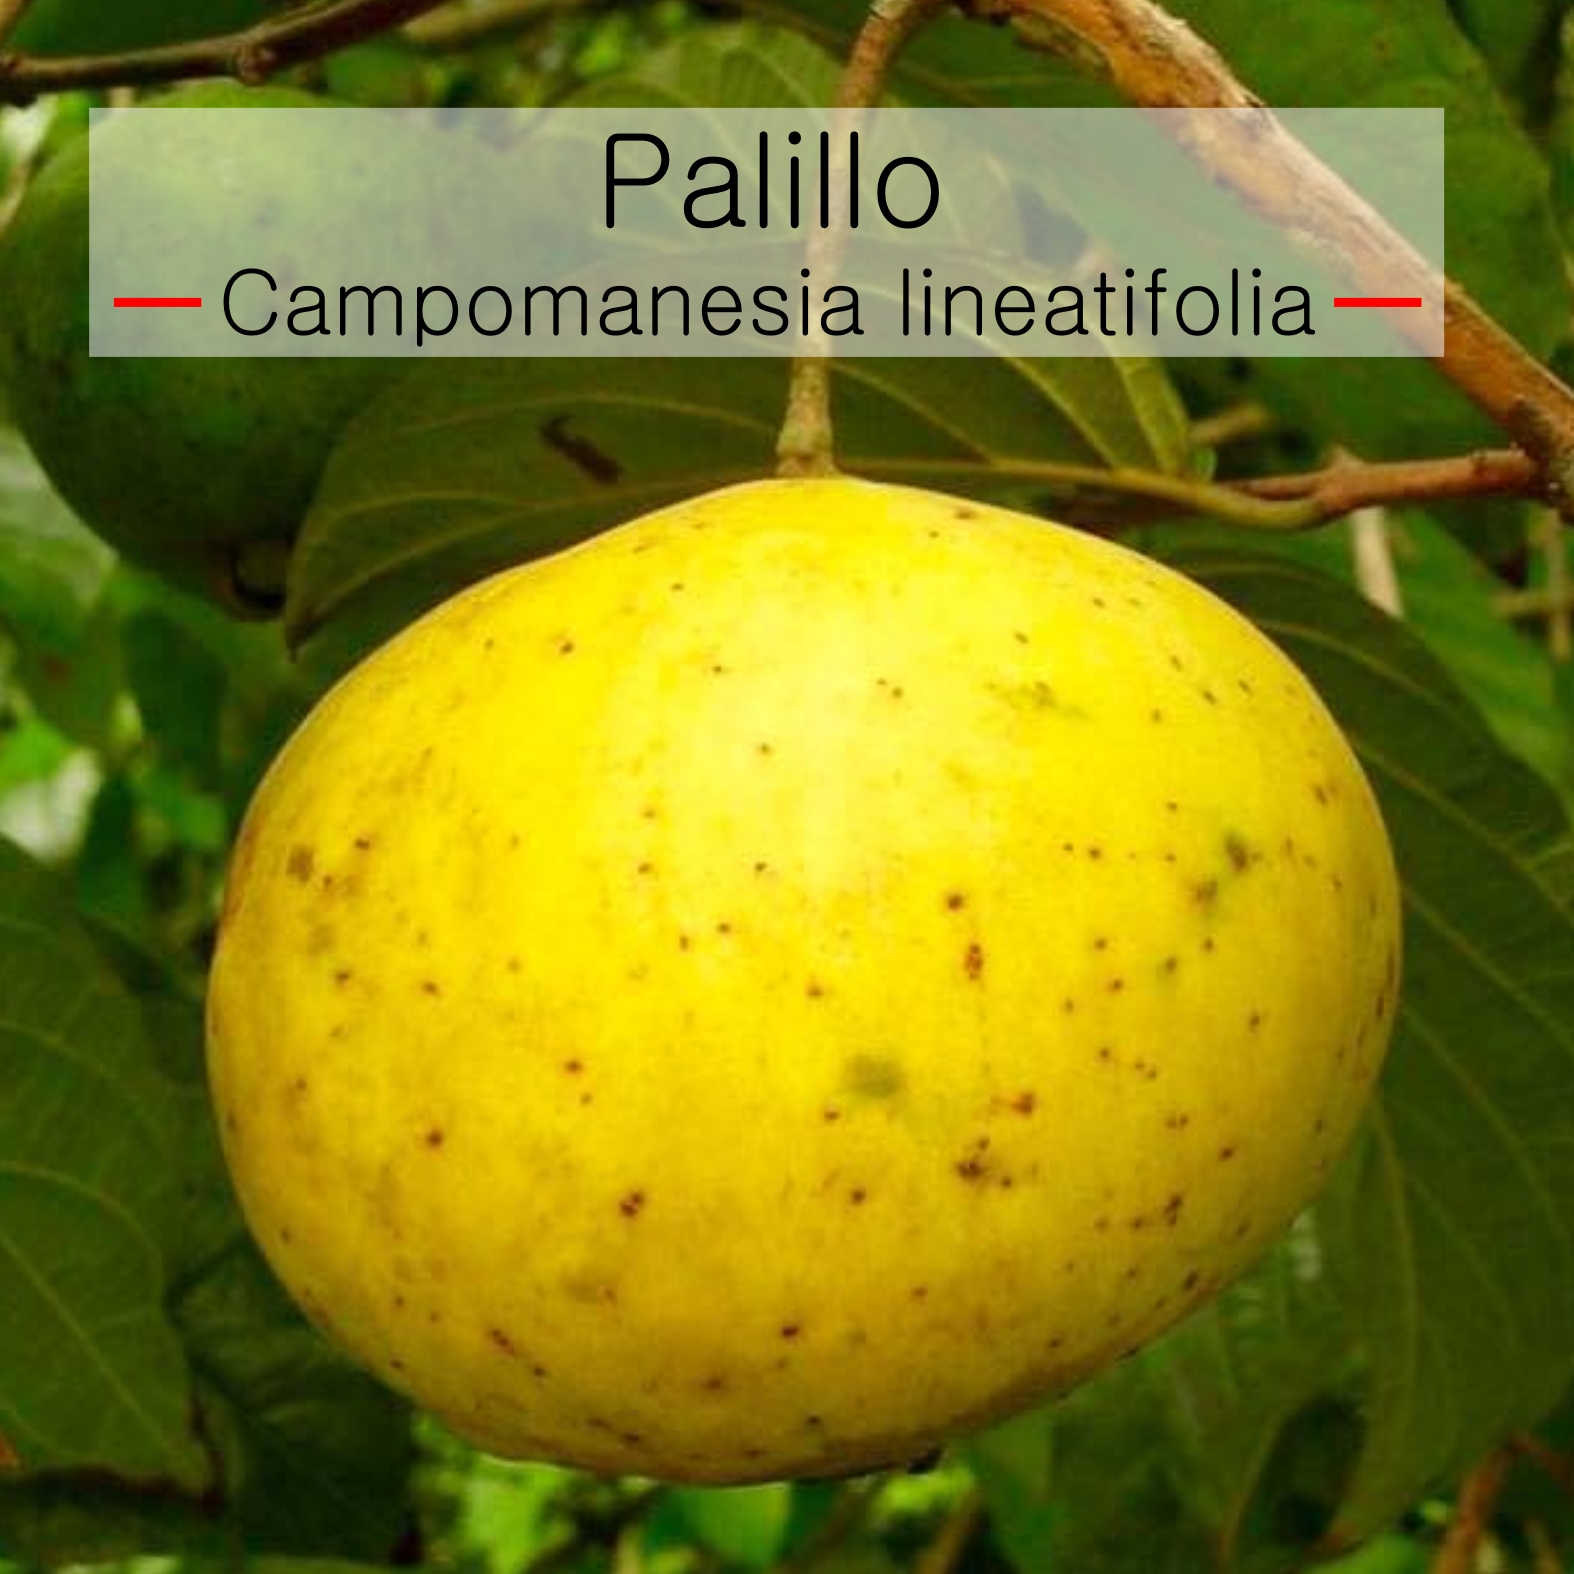 Campomanesia lineatifolia - Palillo - 1 fresh seed / 1 frischer Samen